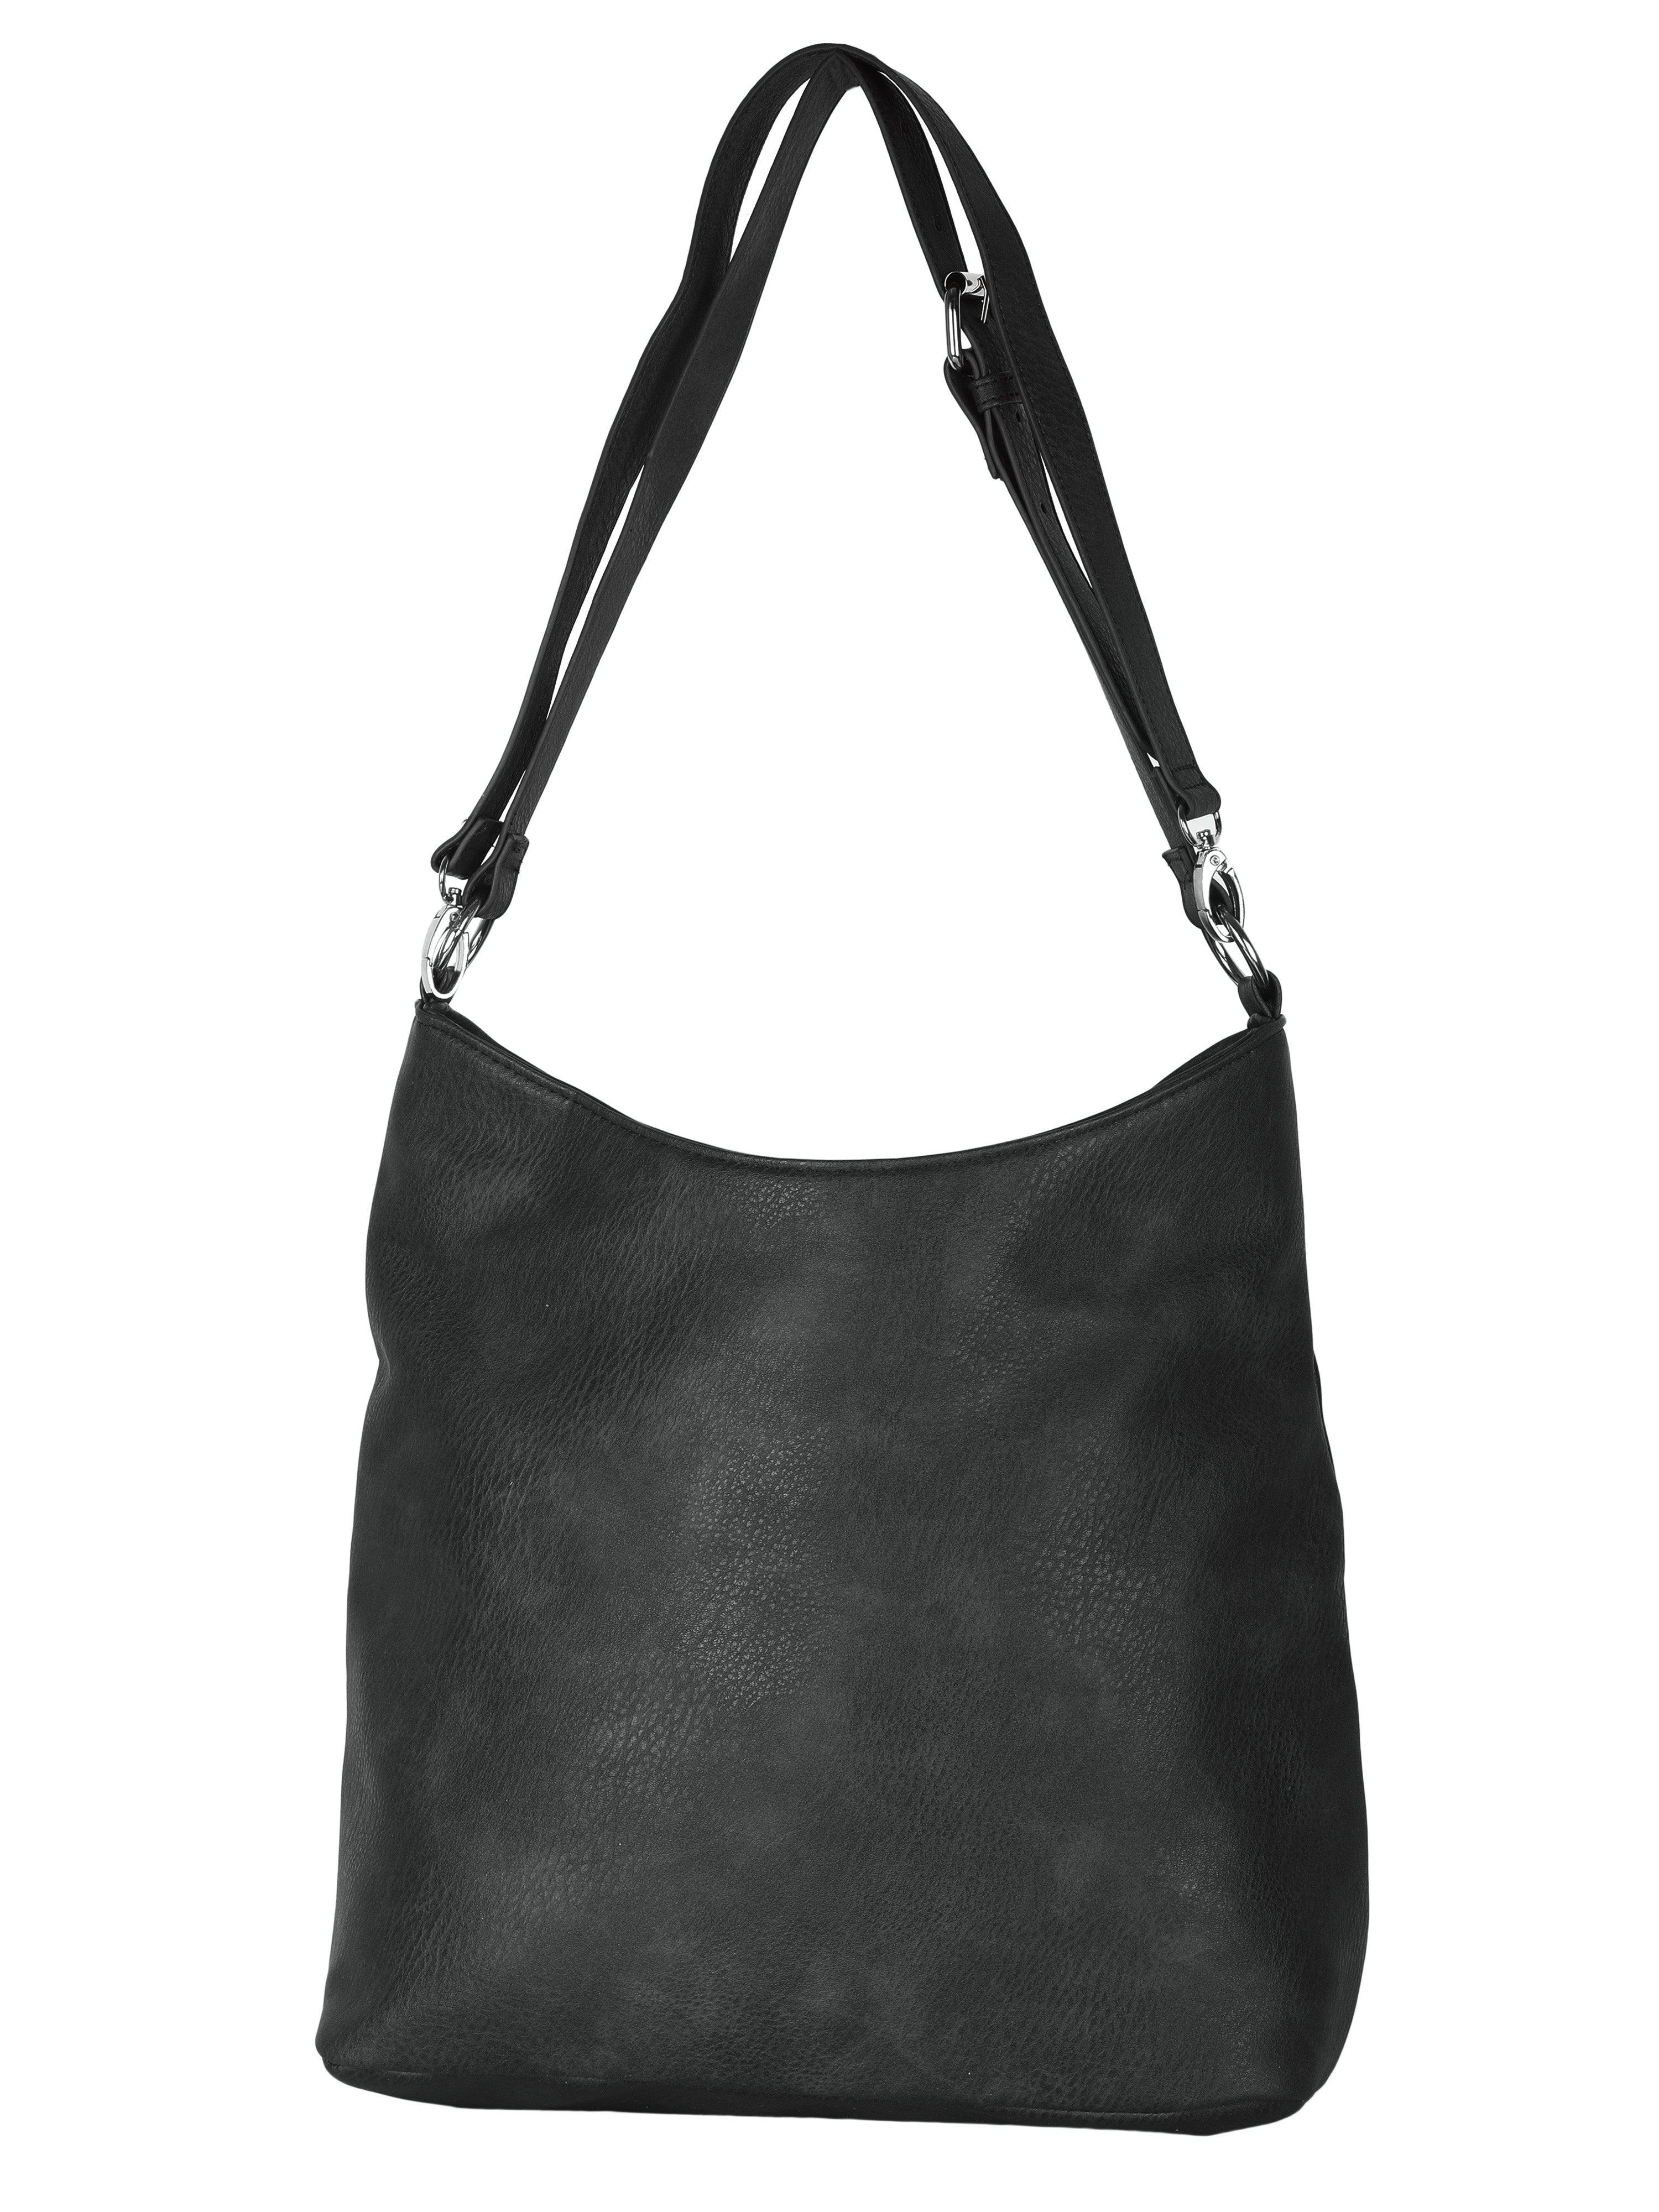 Bulchee Ladies Black Shoulder Bag - HBPUF07.1-19